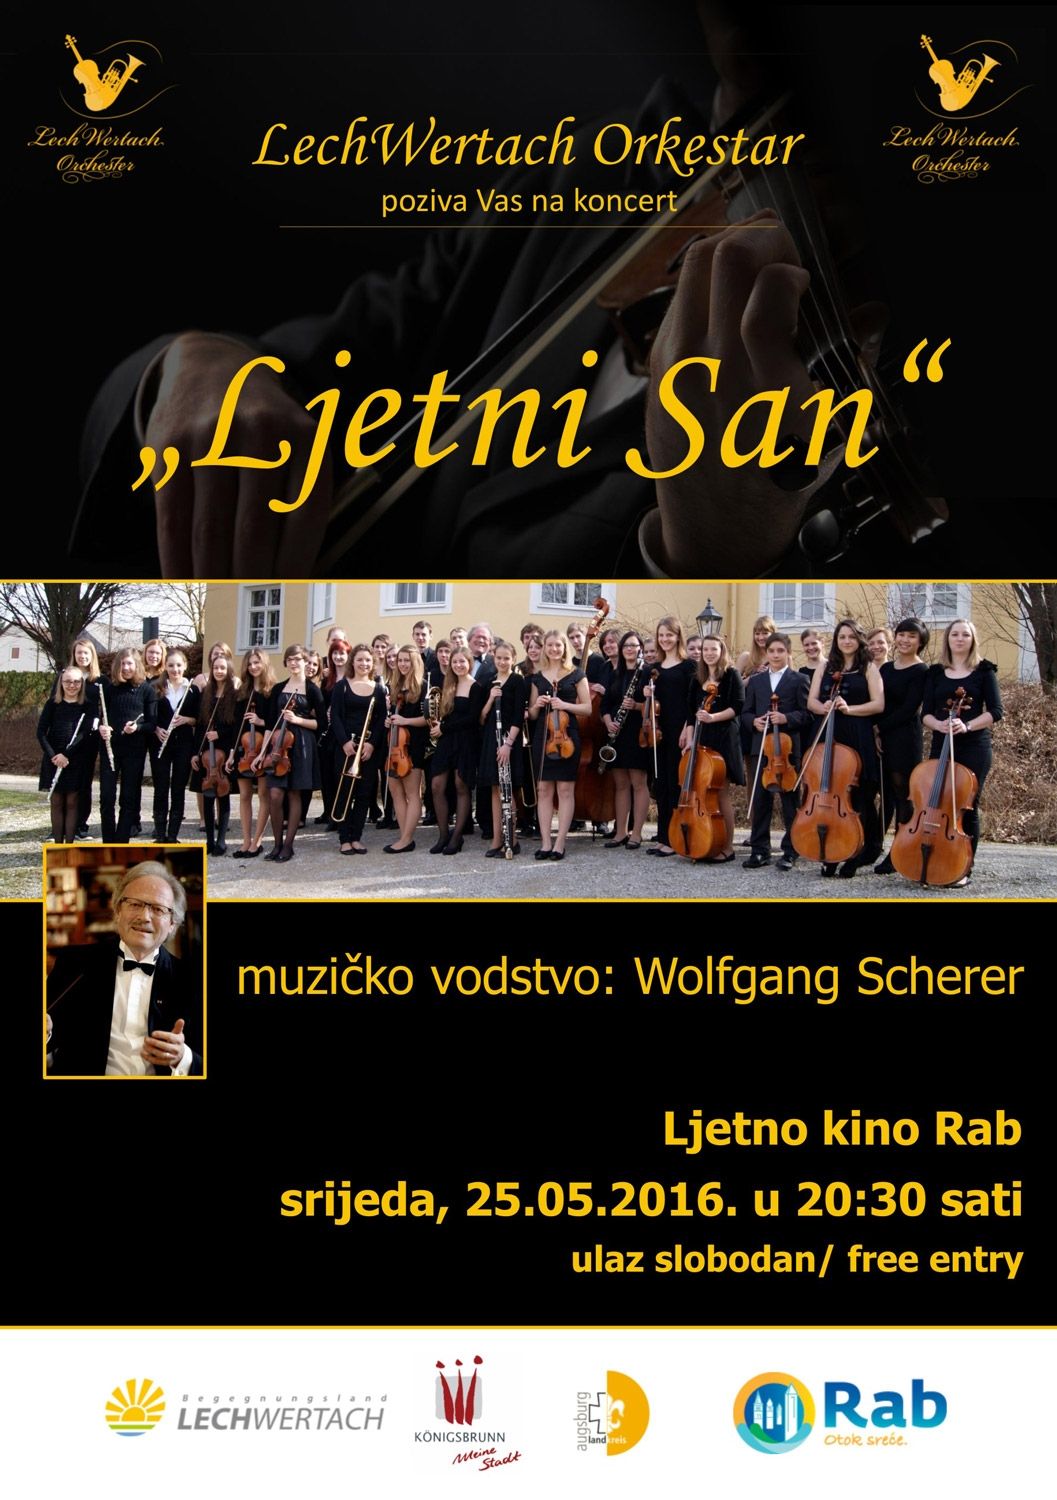 20 godina prijateljstva Raba i Königsbrunna uz poklon koncert Lech-Wertach orkestra